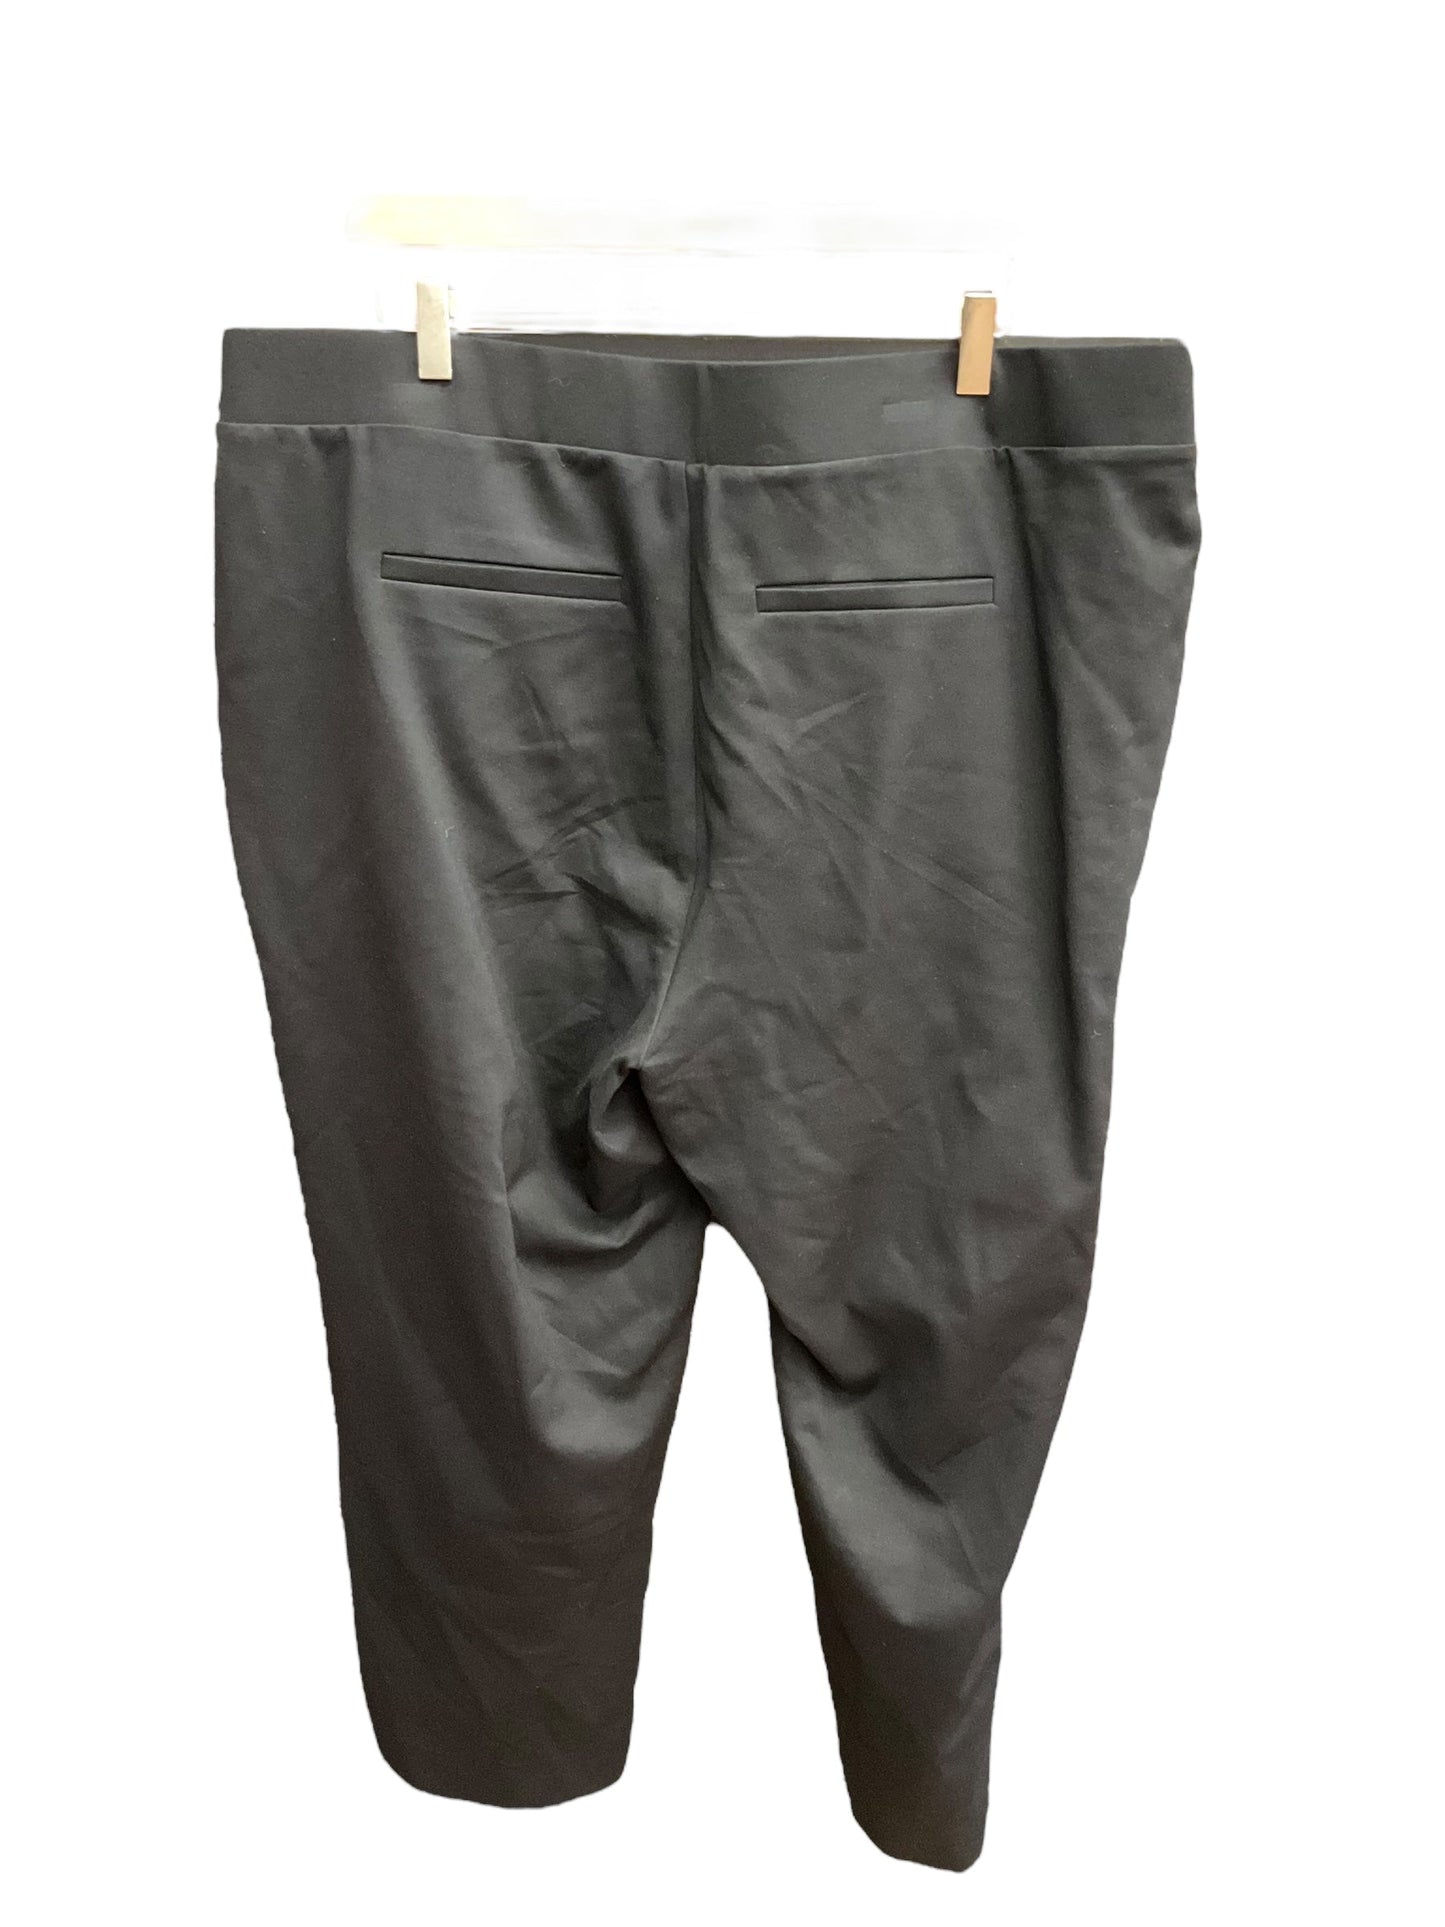 Black Pants Leggings Torrid, Size 3x